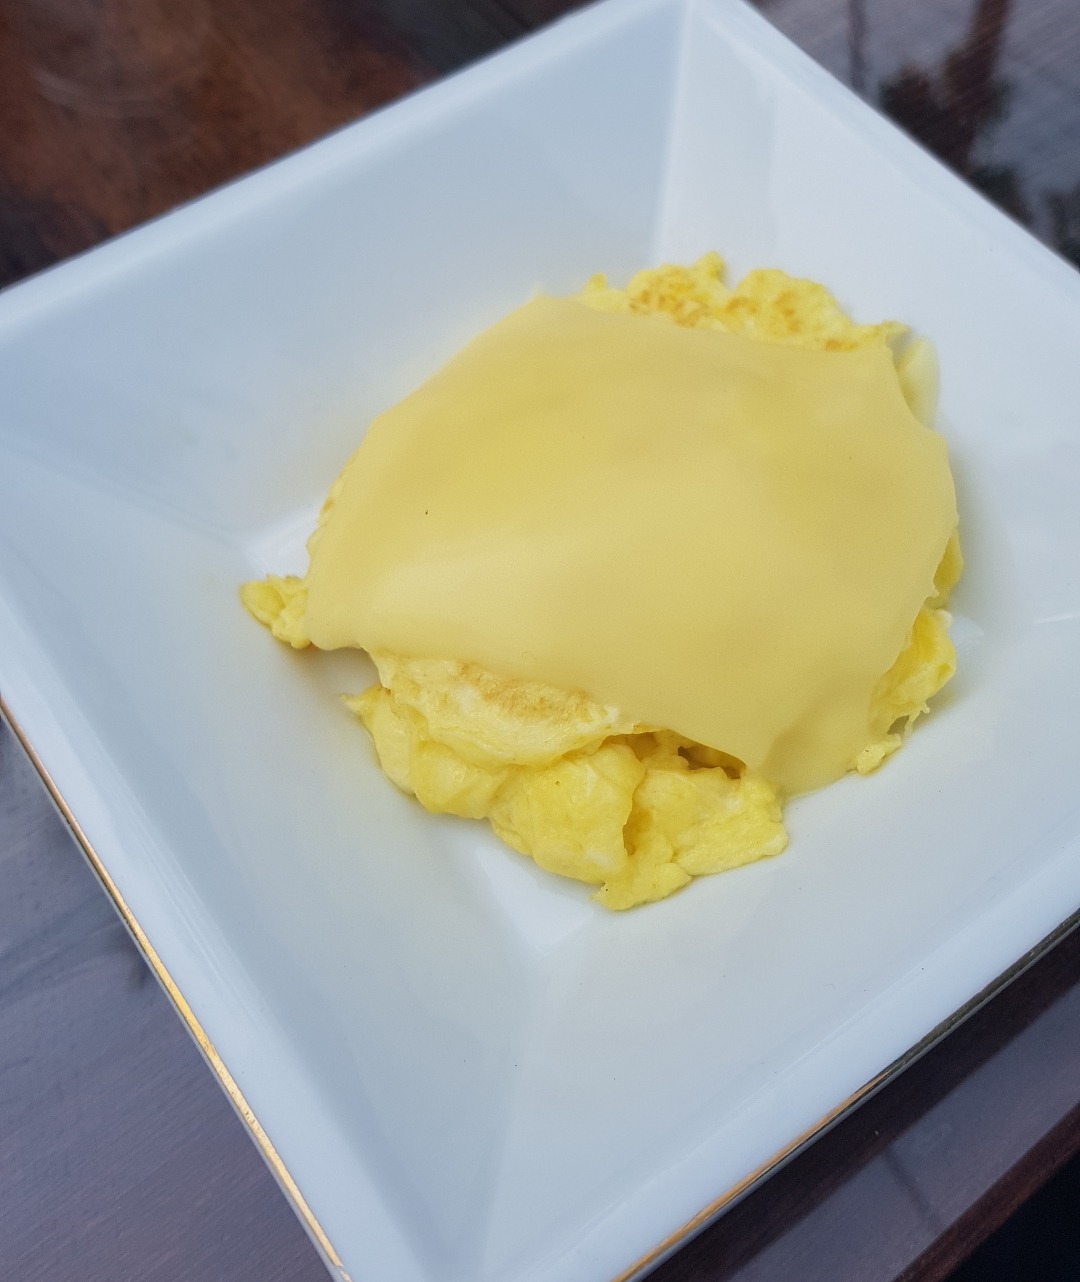 stanbuli egg 👌

Milk+egg+cheese @ Foods at Home - Bahrain